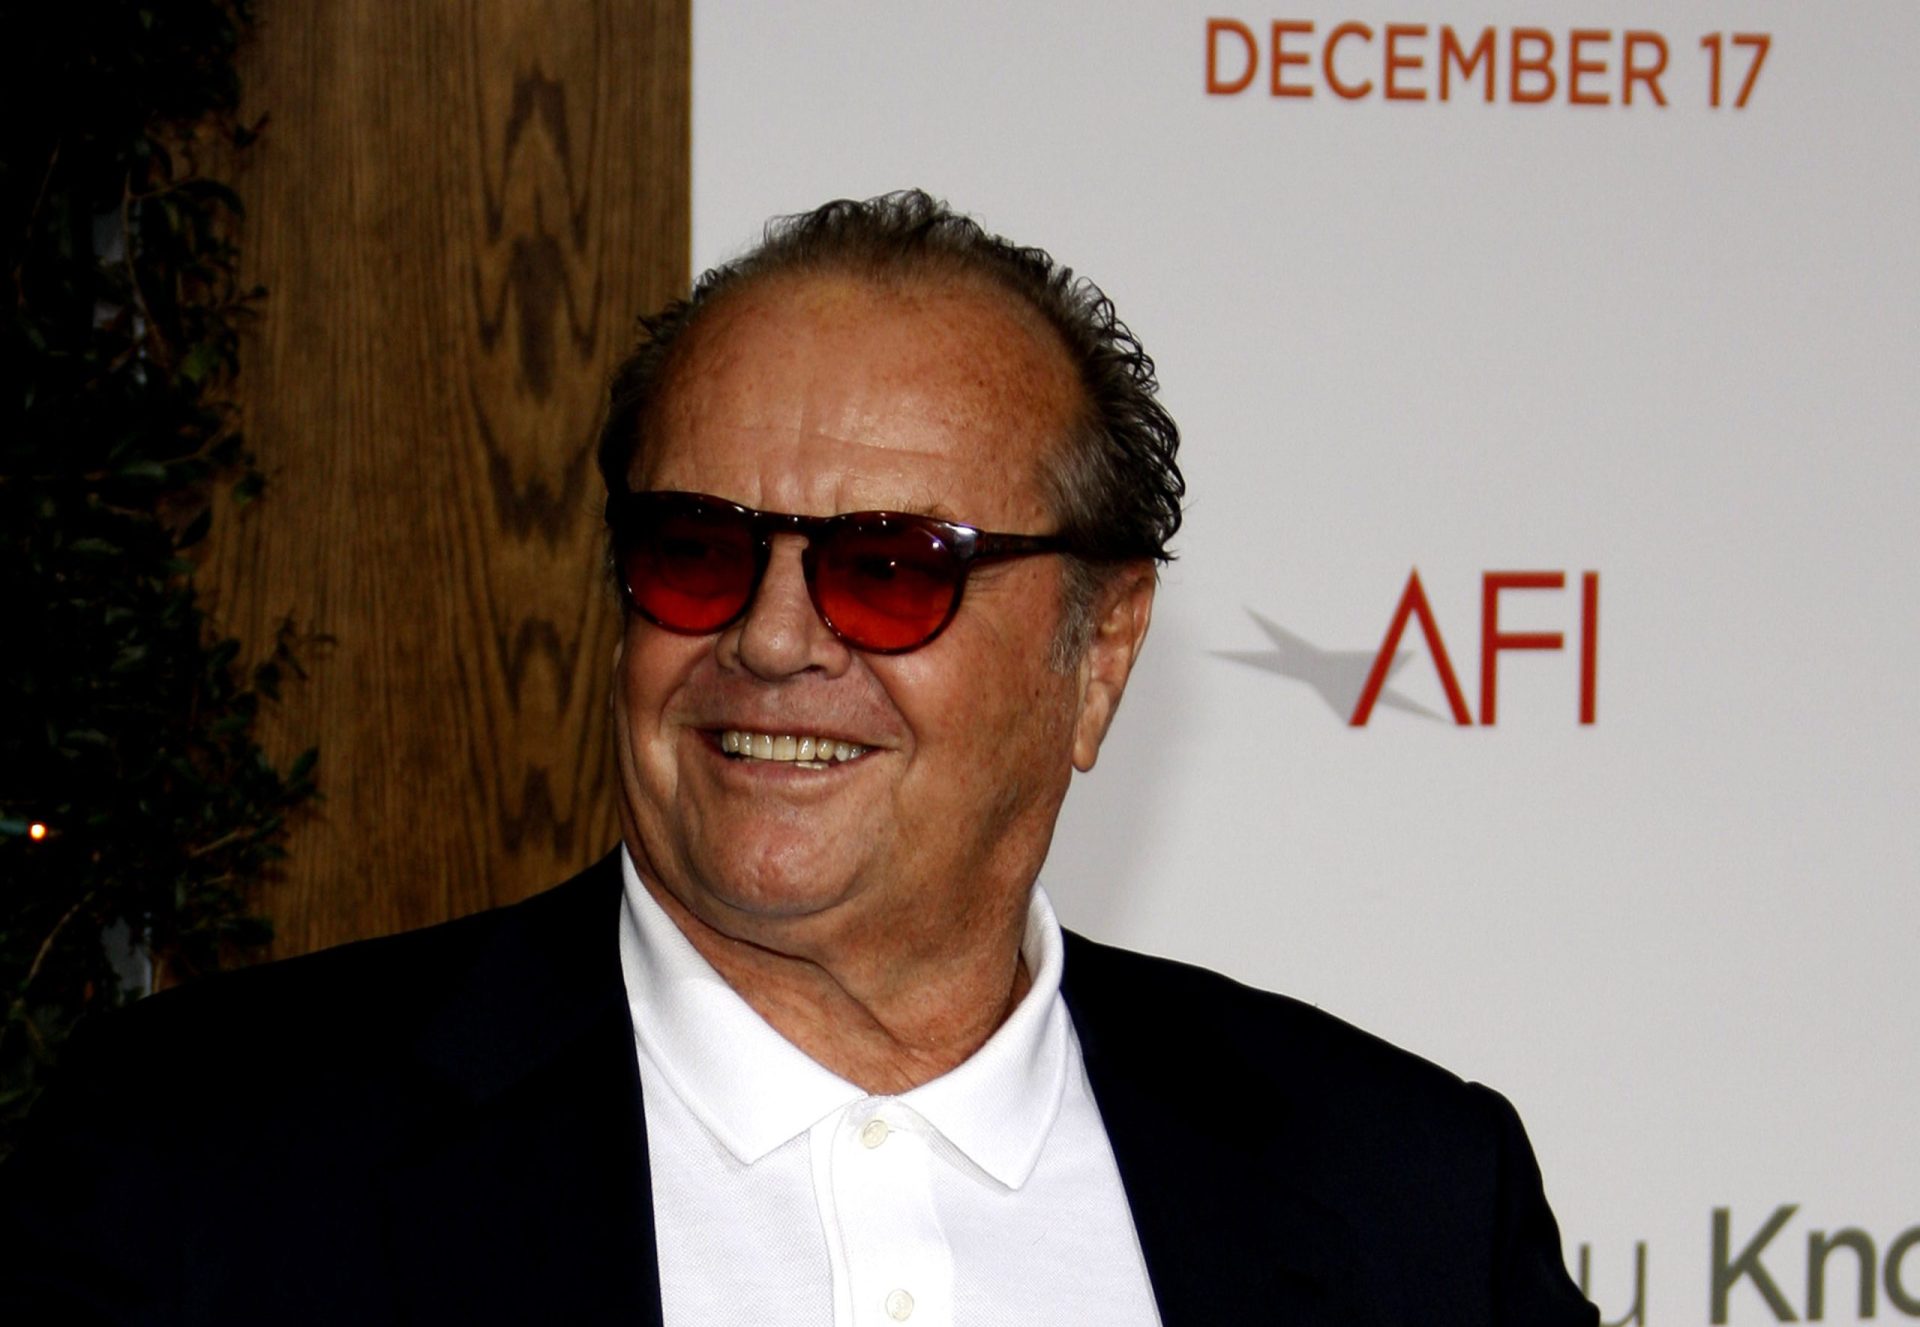 Jack Nicholson surge em público…com uns quilos a mais [FOTO]